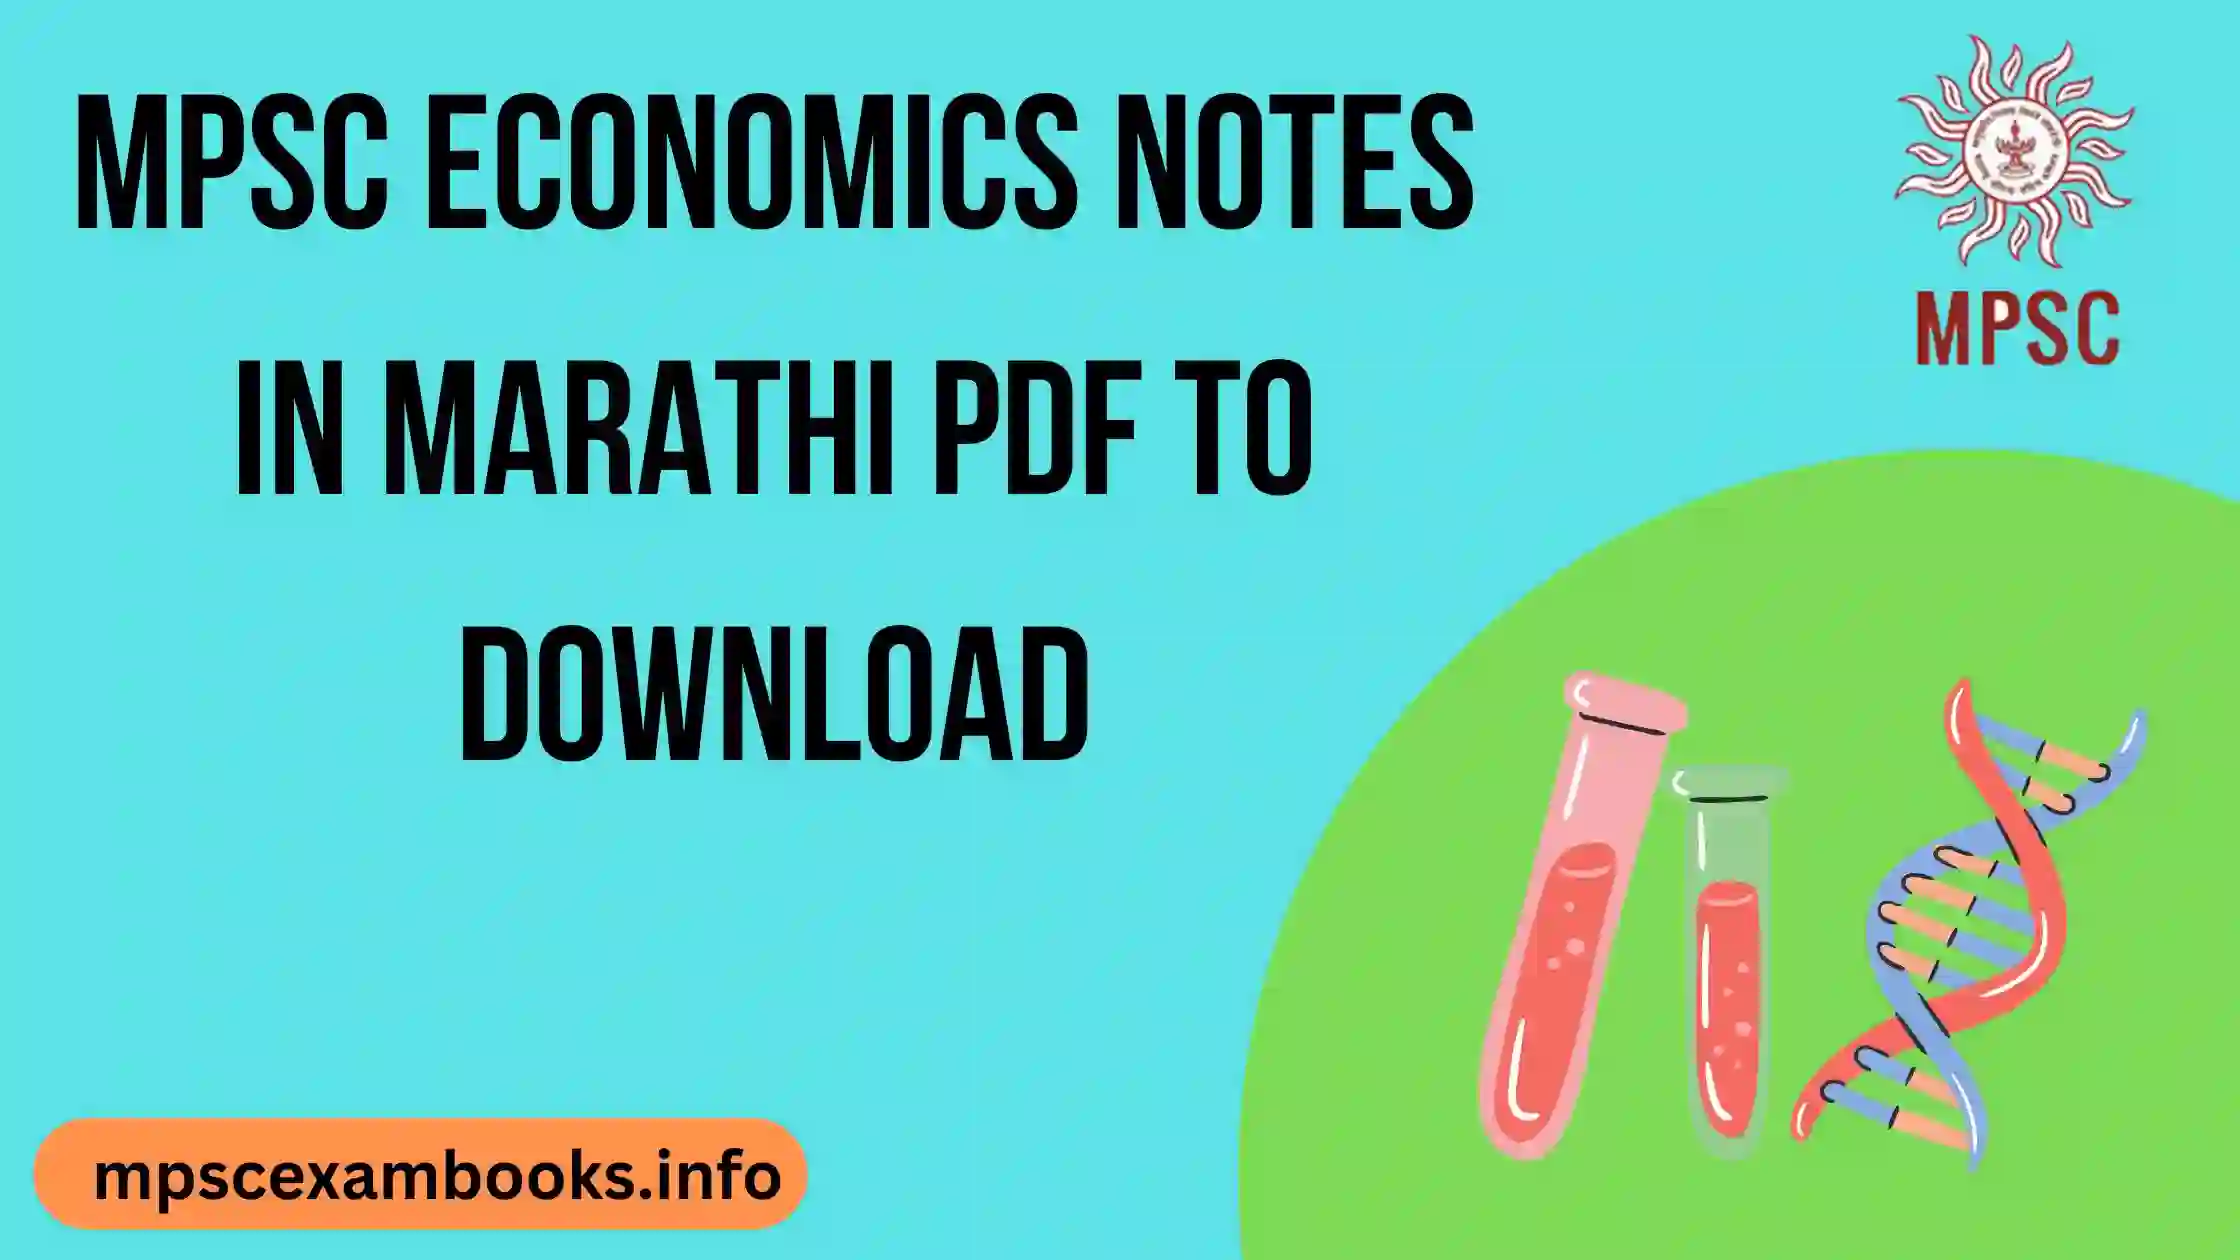 MPSC Economics notes in Marathi pdf To Download